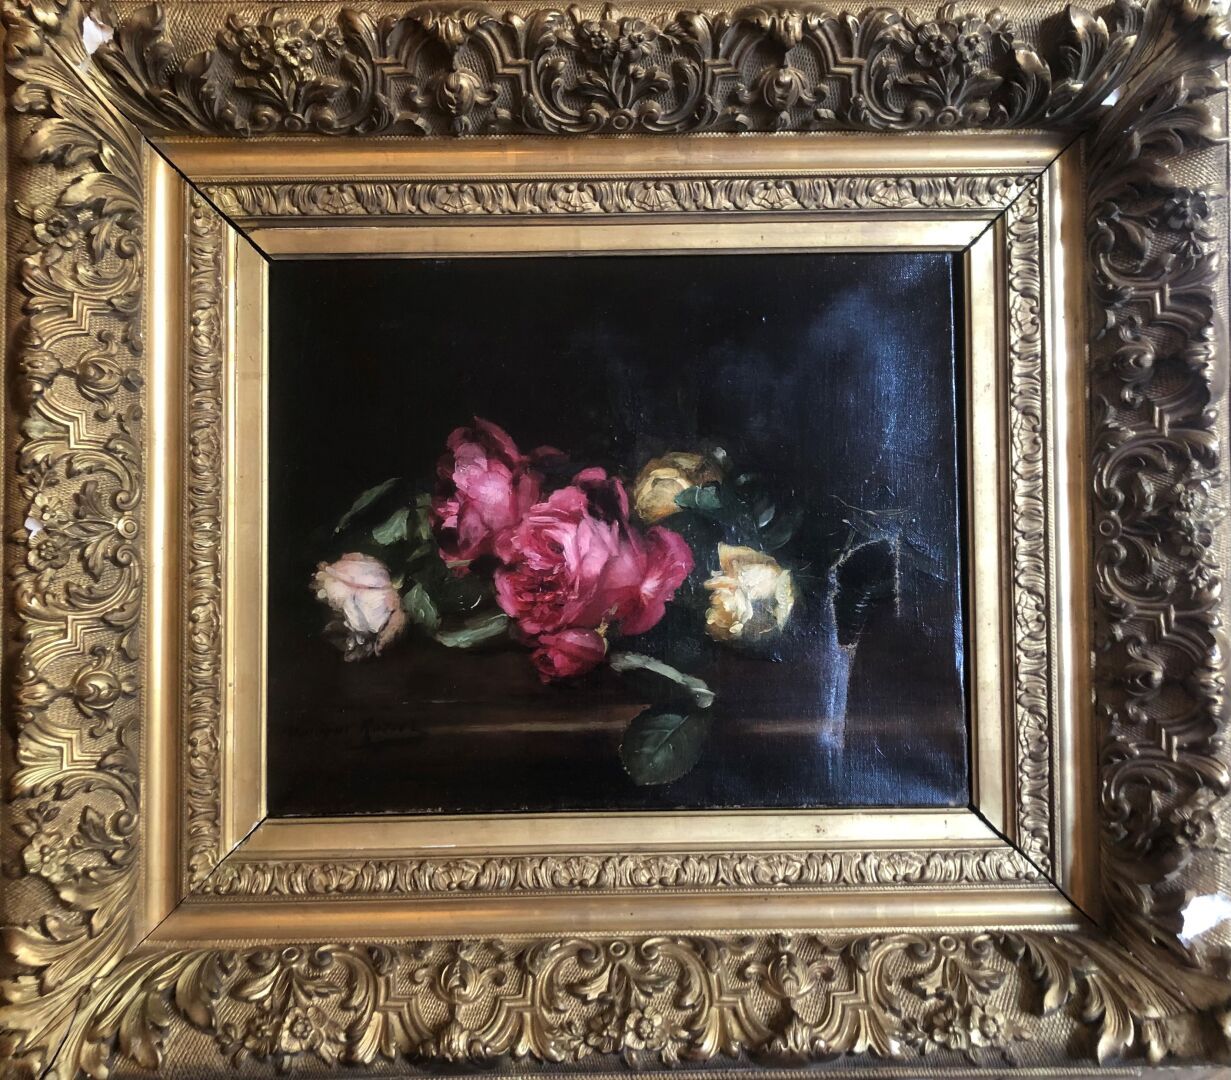 Null 多米尼克-罗齐尔 (1840-1901)

抛撒玫瑰花

布面油画，左下方有签名。

32,5 x 41 cm

木质框架和镀金灰泥

事故，洞。